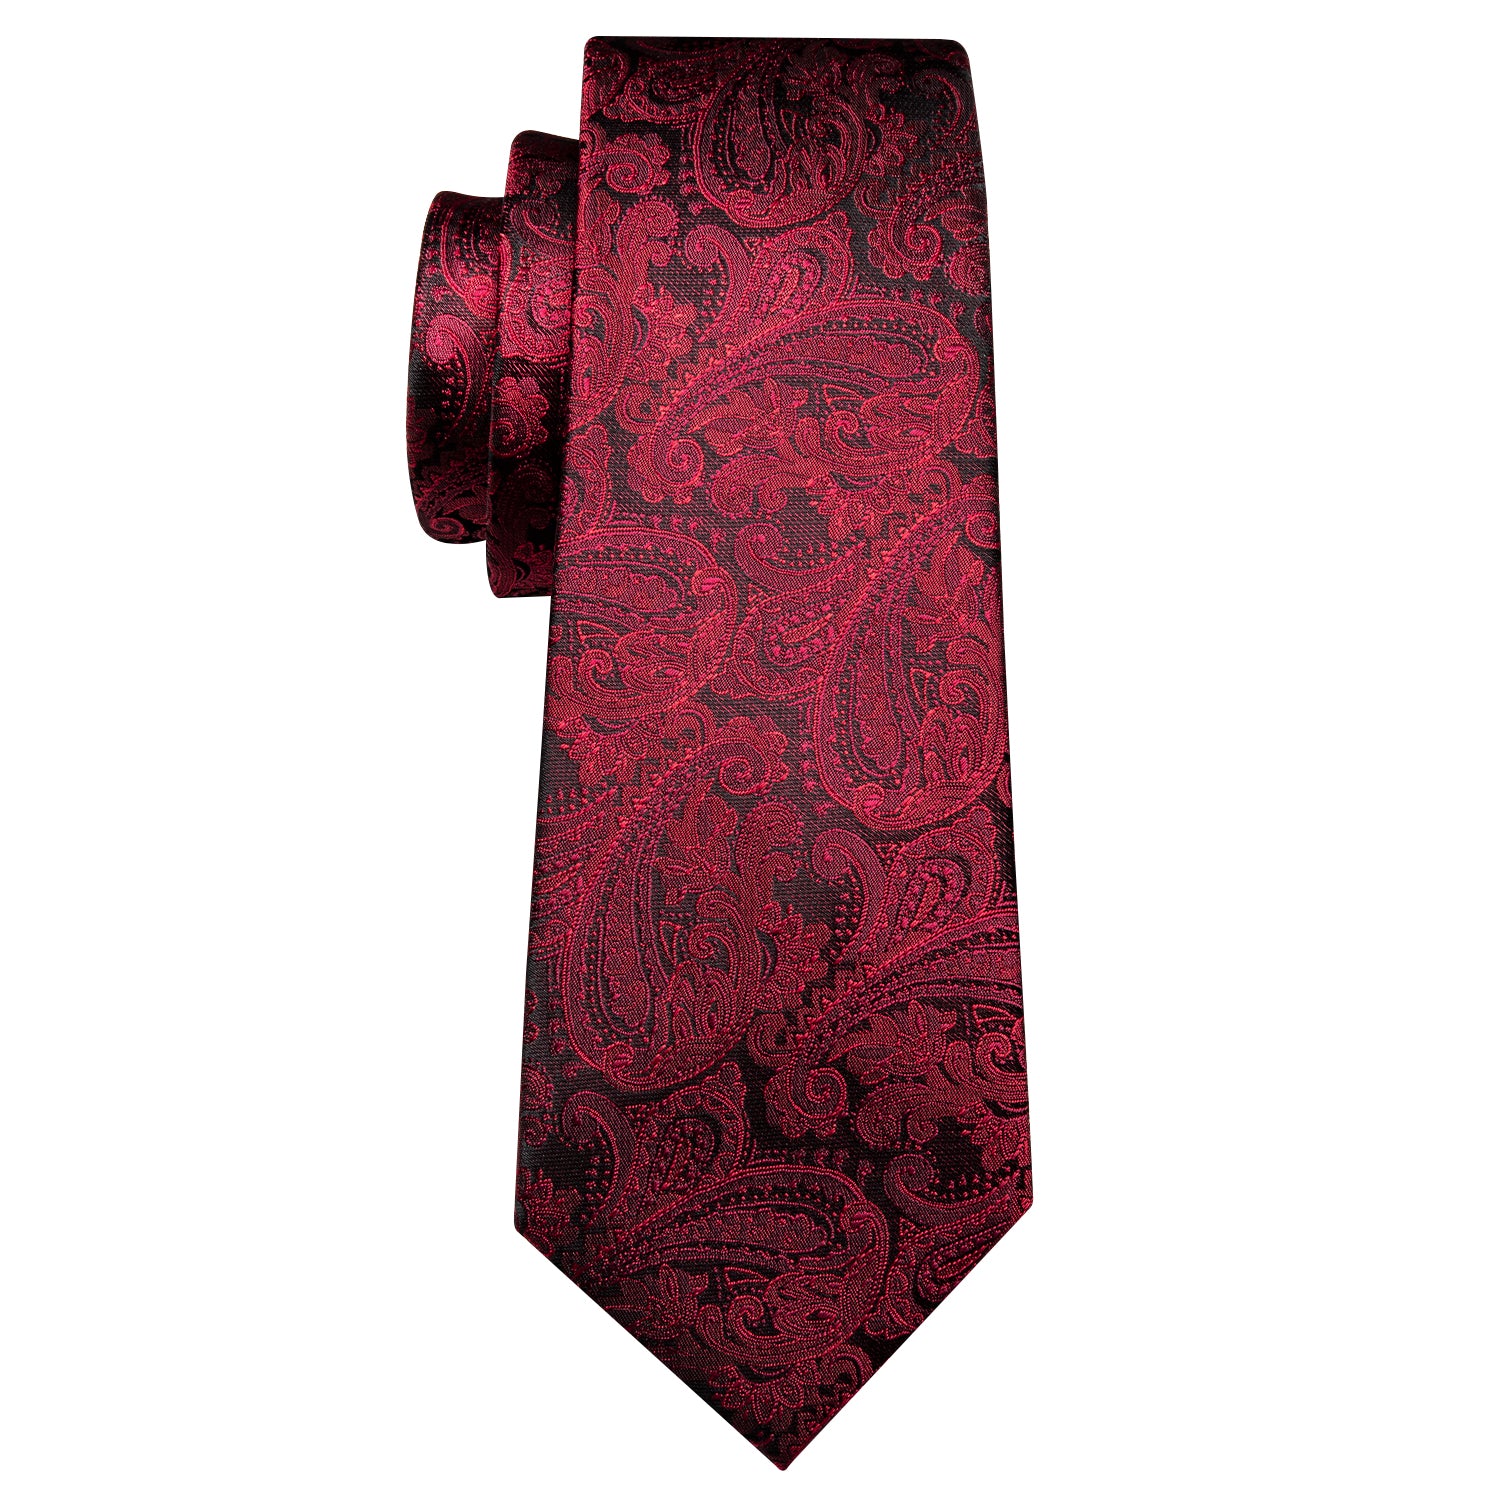 Luxury Black Red Paisley Tie Hanky Cufflinks Set